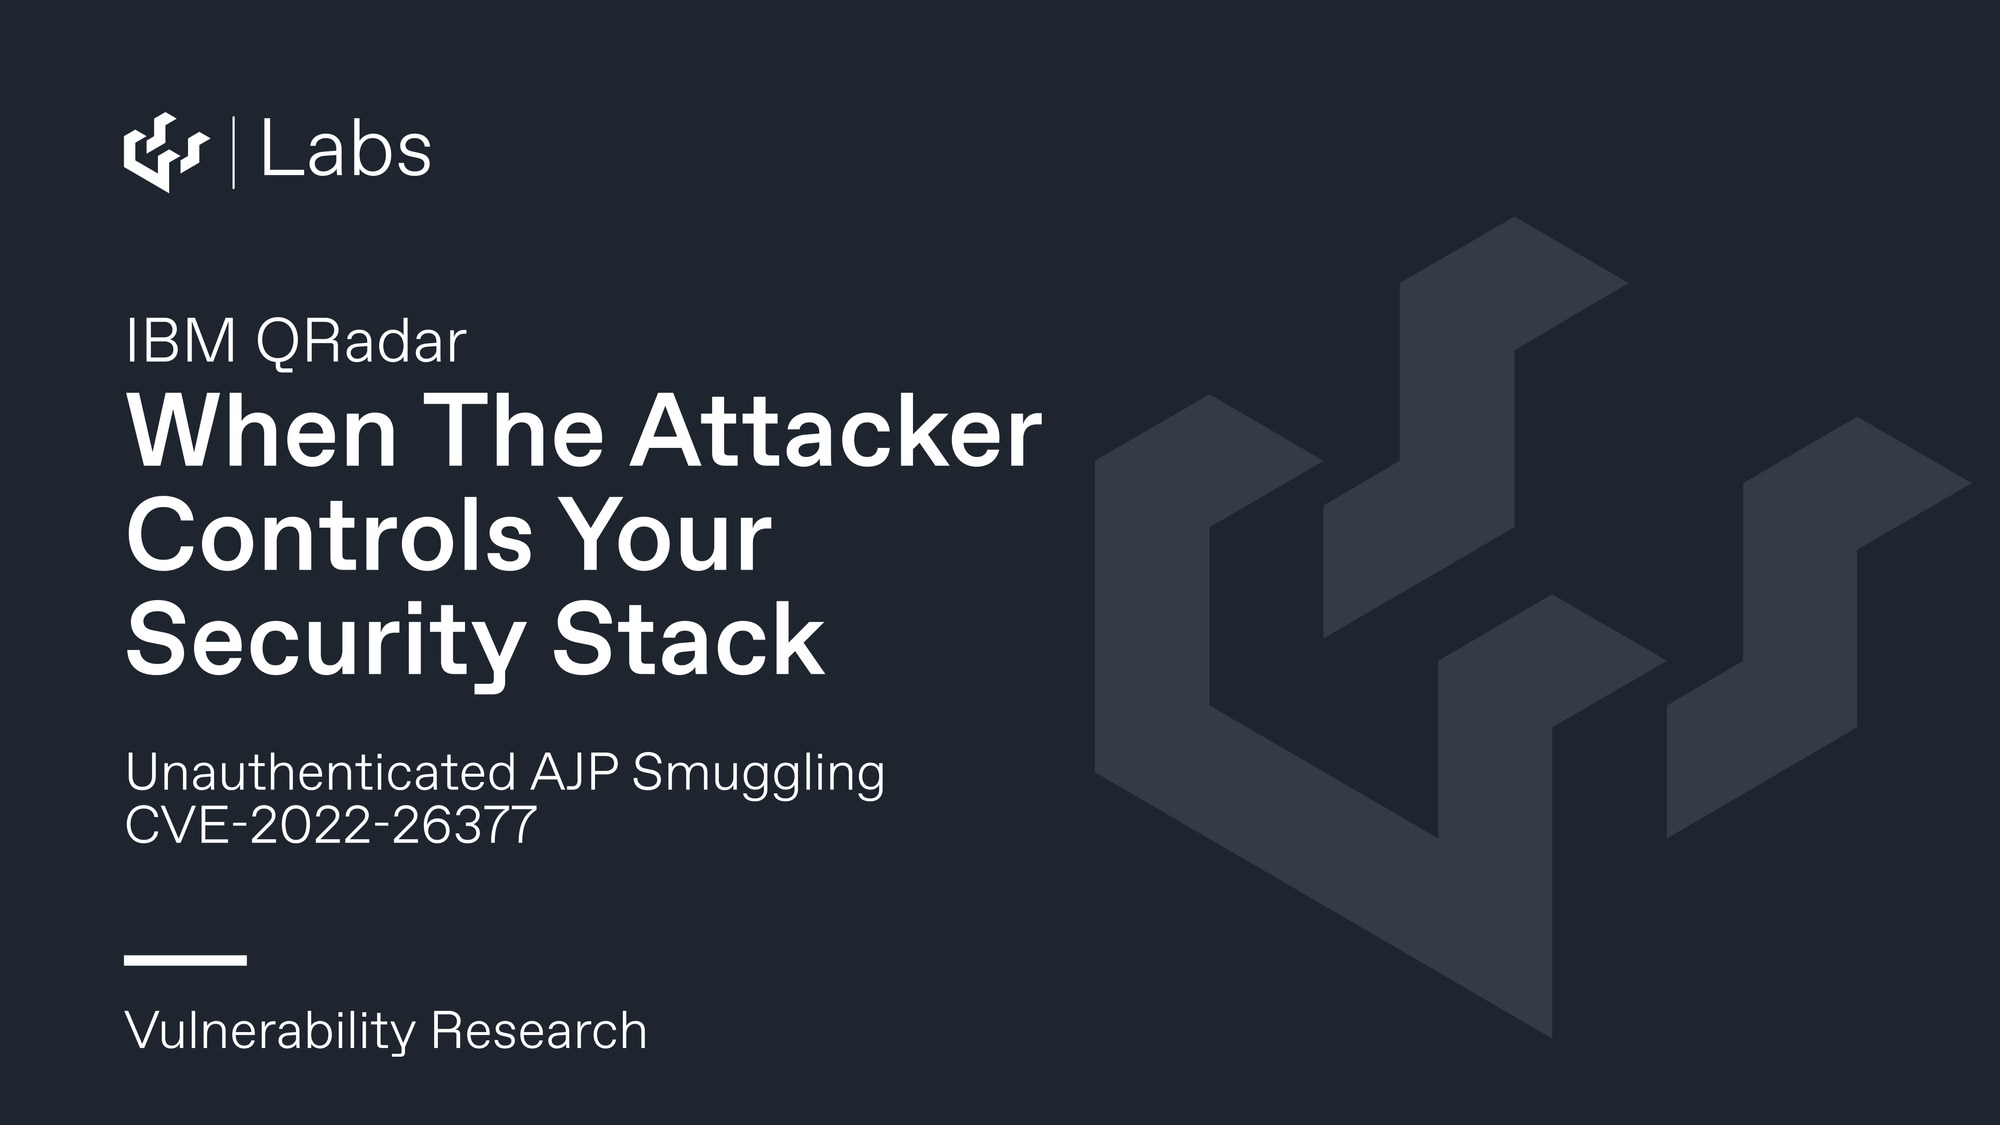 IBM QRadar - When The Attacker Controls Your Security Stack   (CVE-2022-26377)